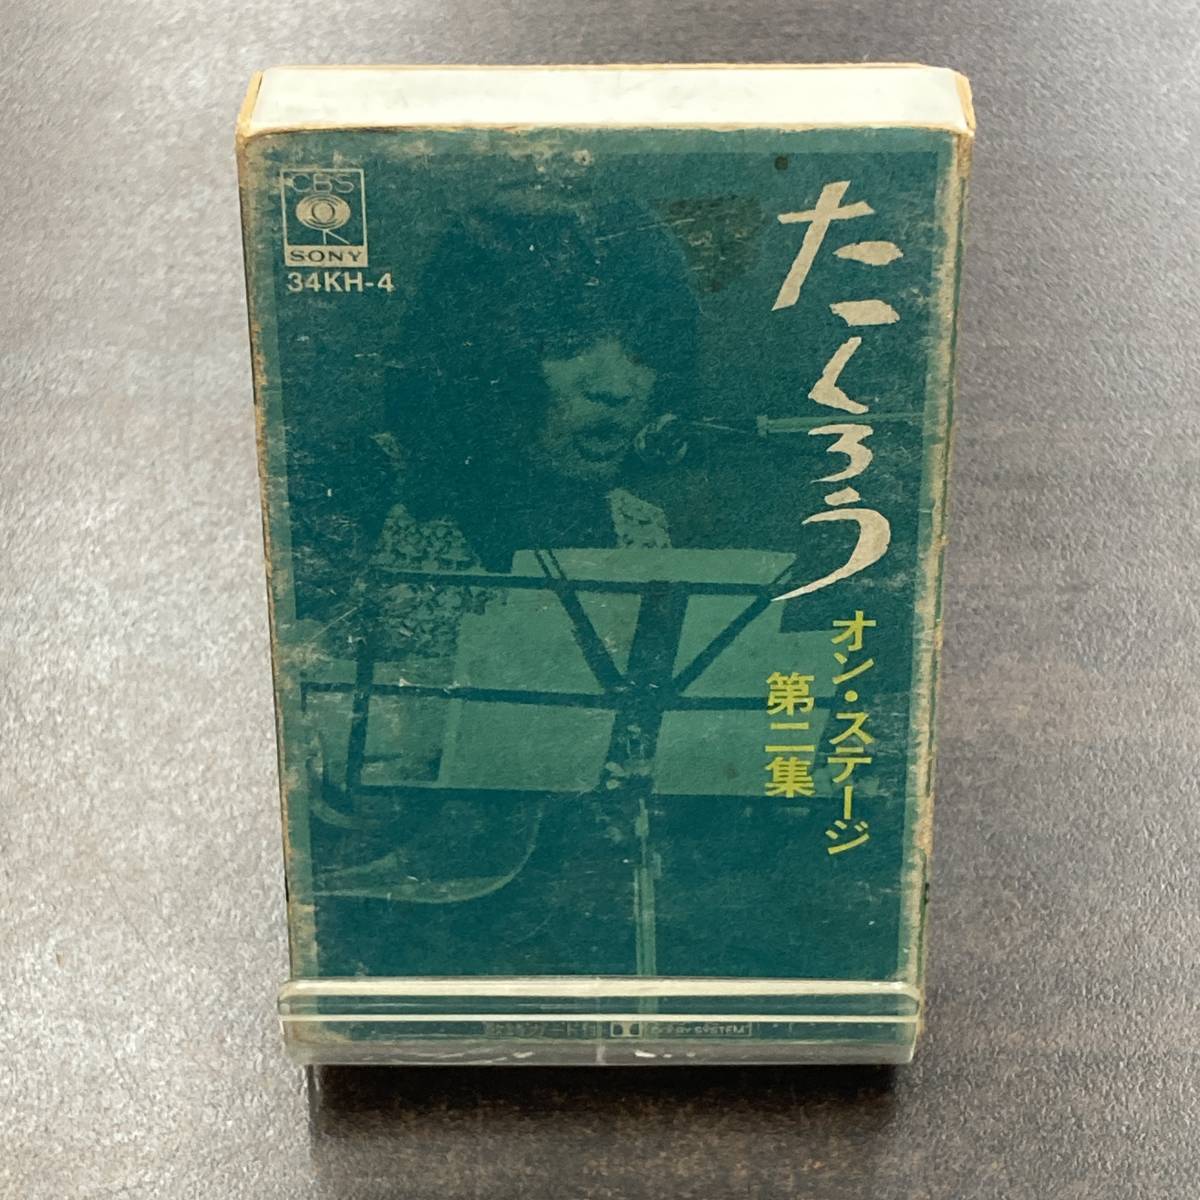 1259M 吉田拓郎 オン・ステージ 第二集 カセットテープ / Takurou Yoshida Citypop Cassette Tape_画像1